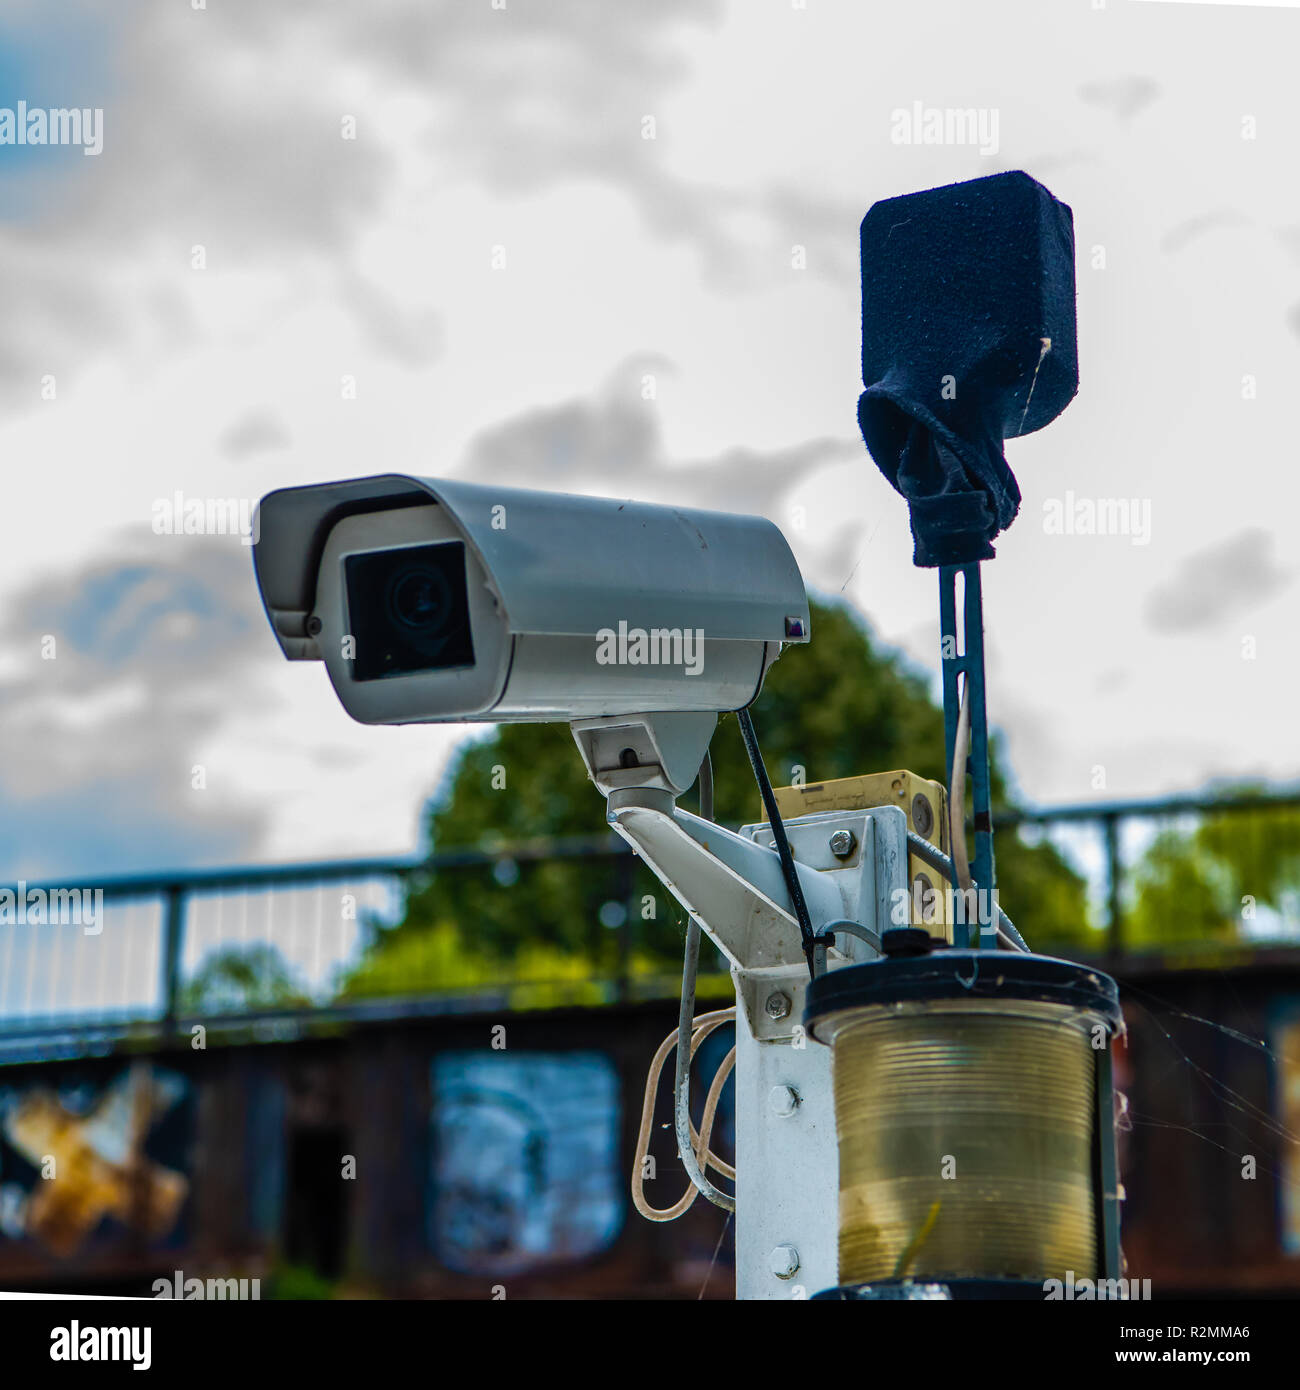 Camera, surveillance, spy, control Stock Photo